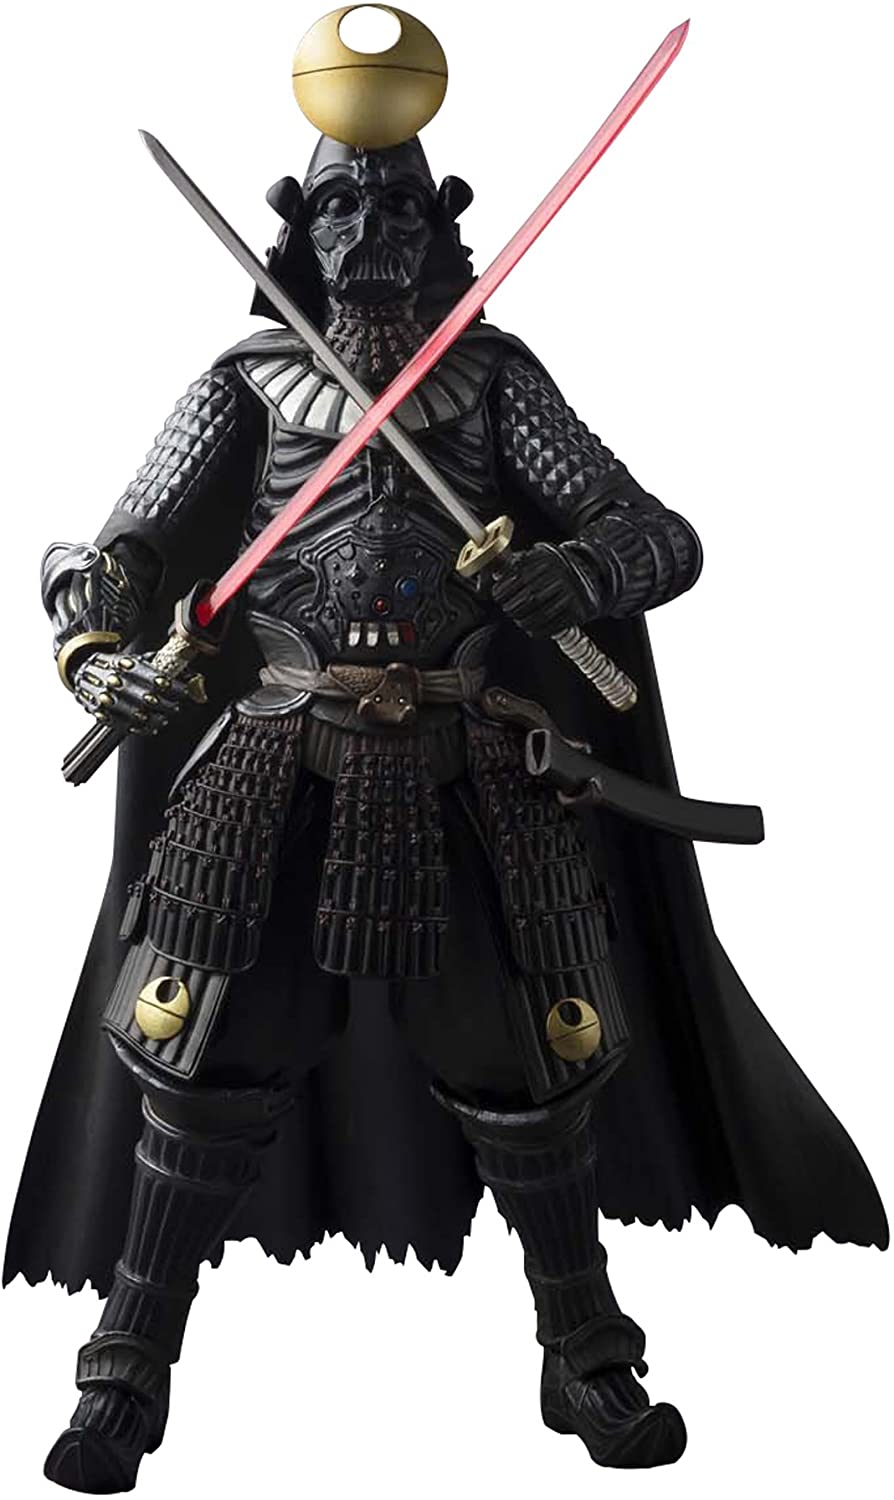 Bandai Tamashii Nations Meisho Movie Realization: Samurai General Darth Vader- Death Star Armor Action Figure